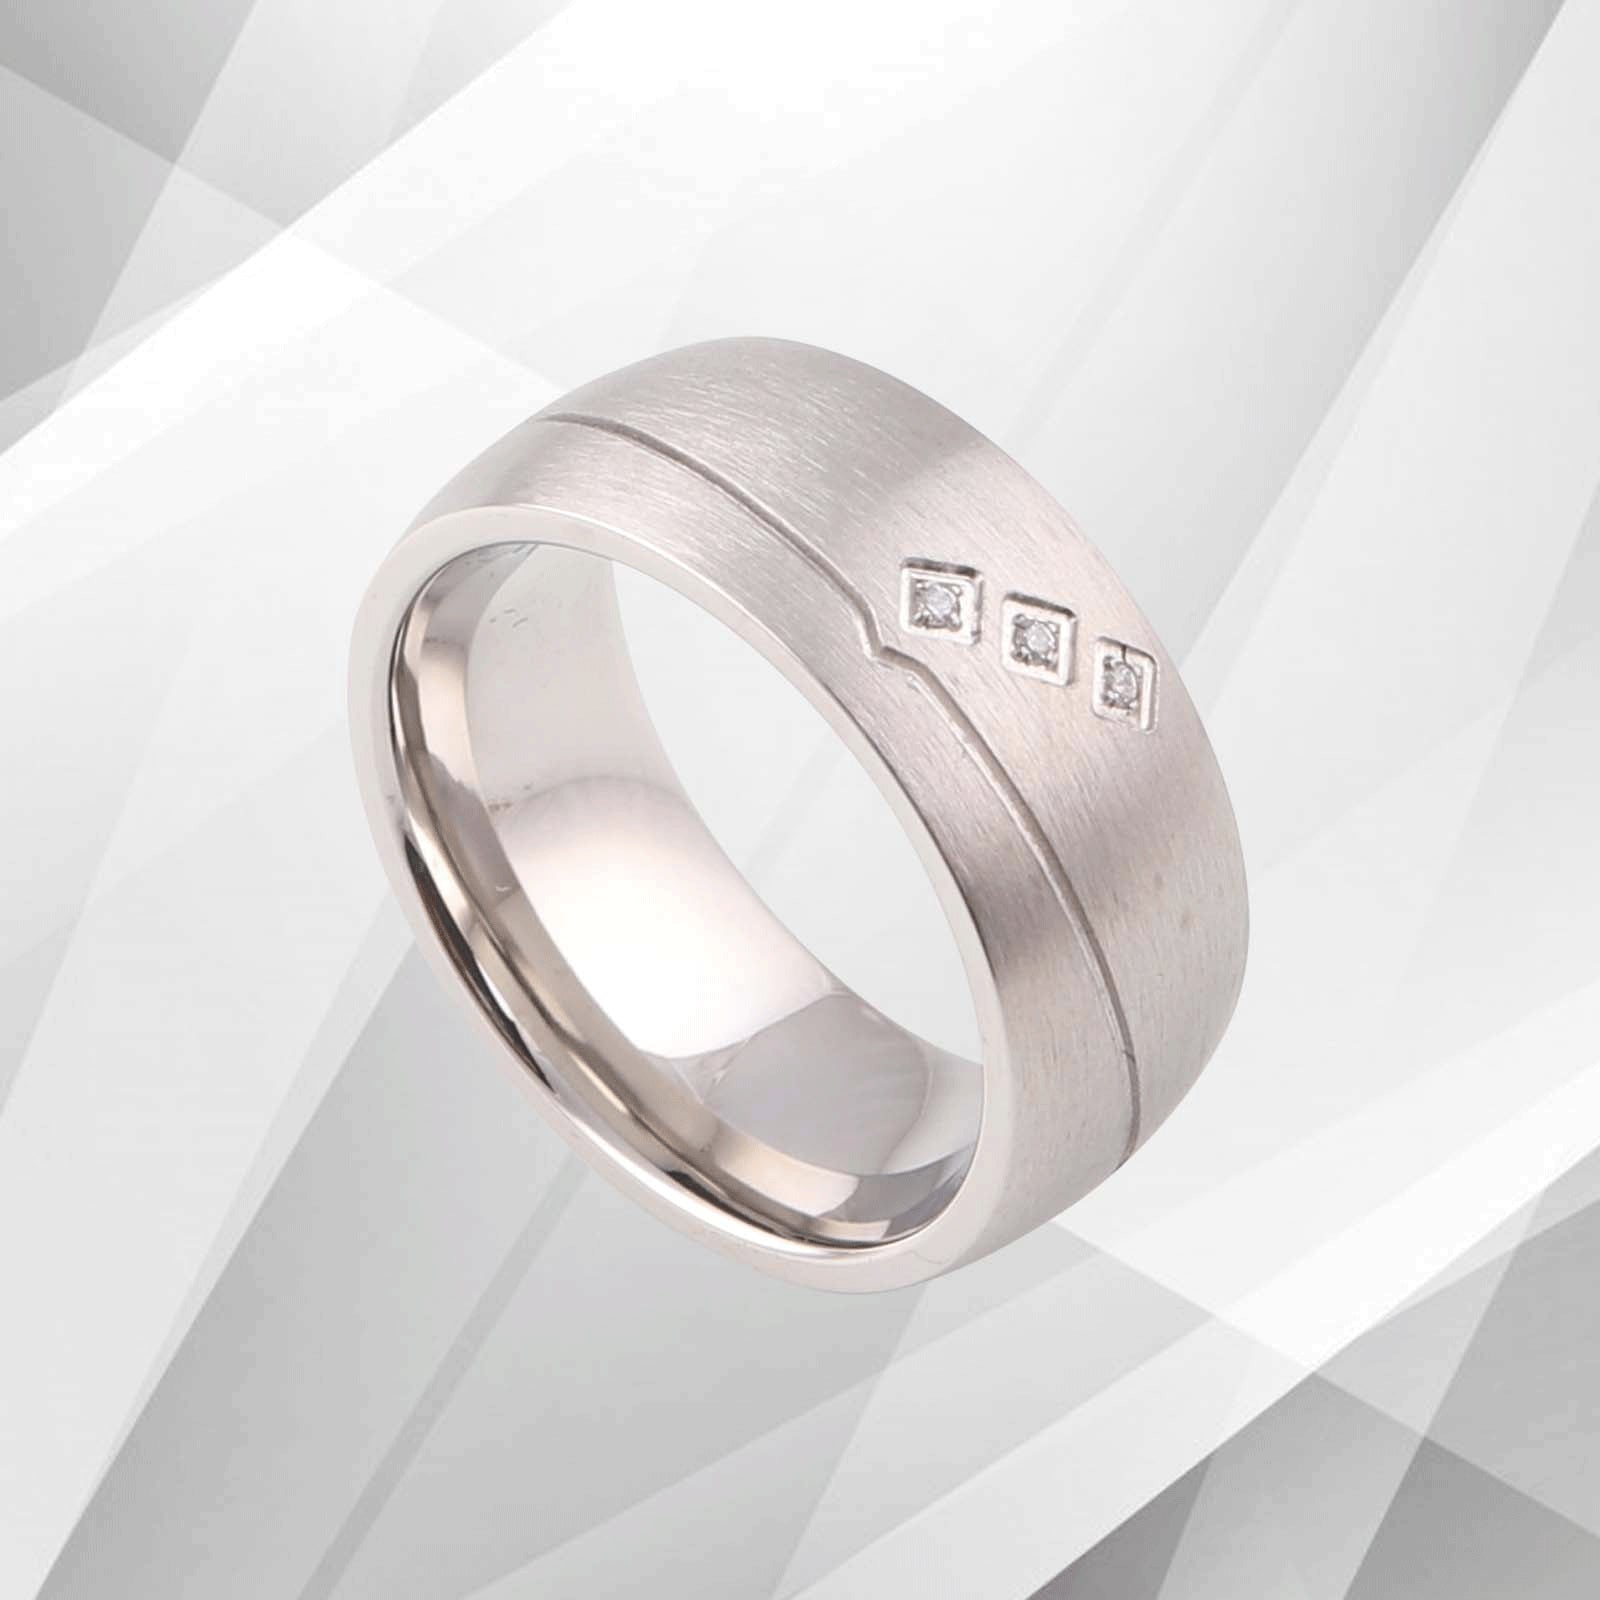 Prestigious 8mm Titanium CZ Diamond Wedding Band Ring - White Gold Finish - Comfort Fit for Women - Jewelry & Watches - Bijou Her -  -  - 